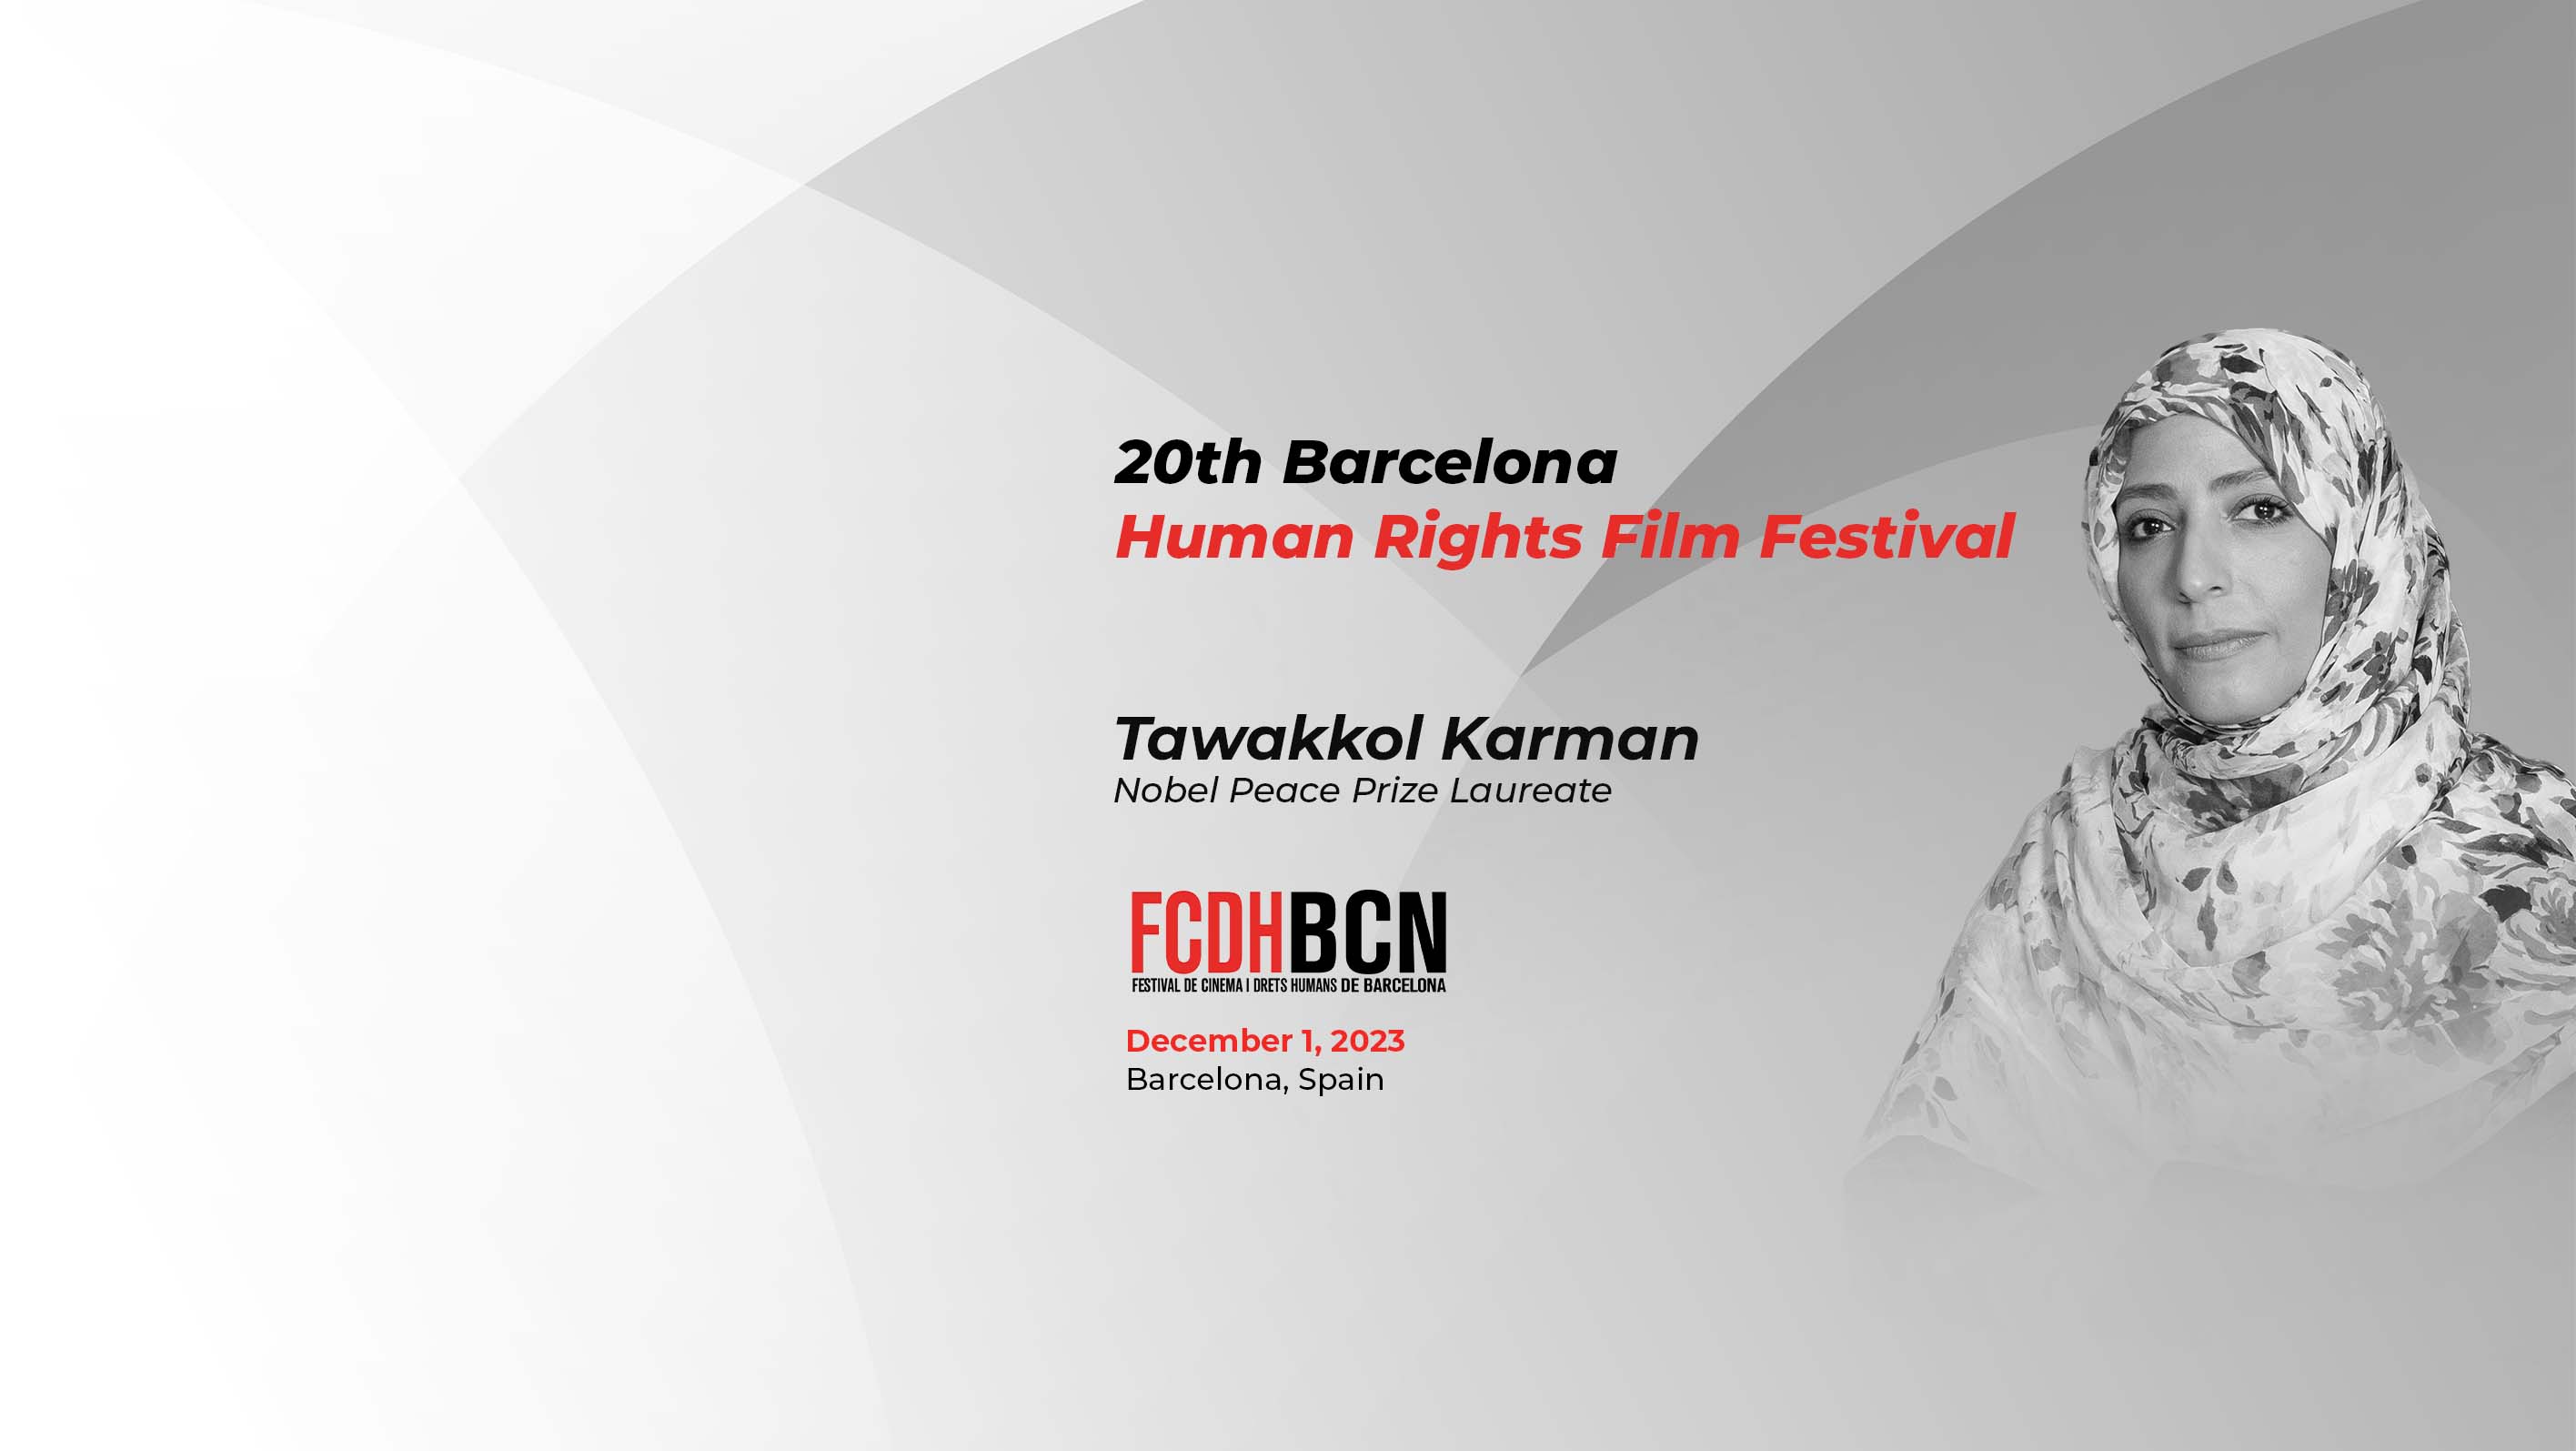 Championing human rights through film: Tawakkol Karman drives change at 20th Barcelona Film Festival